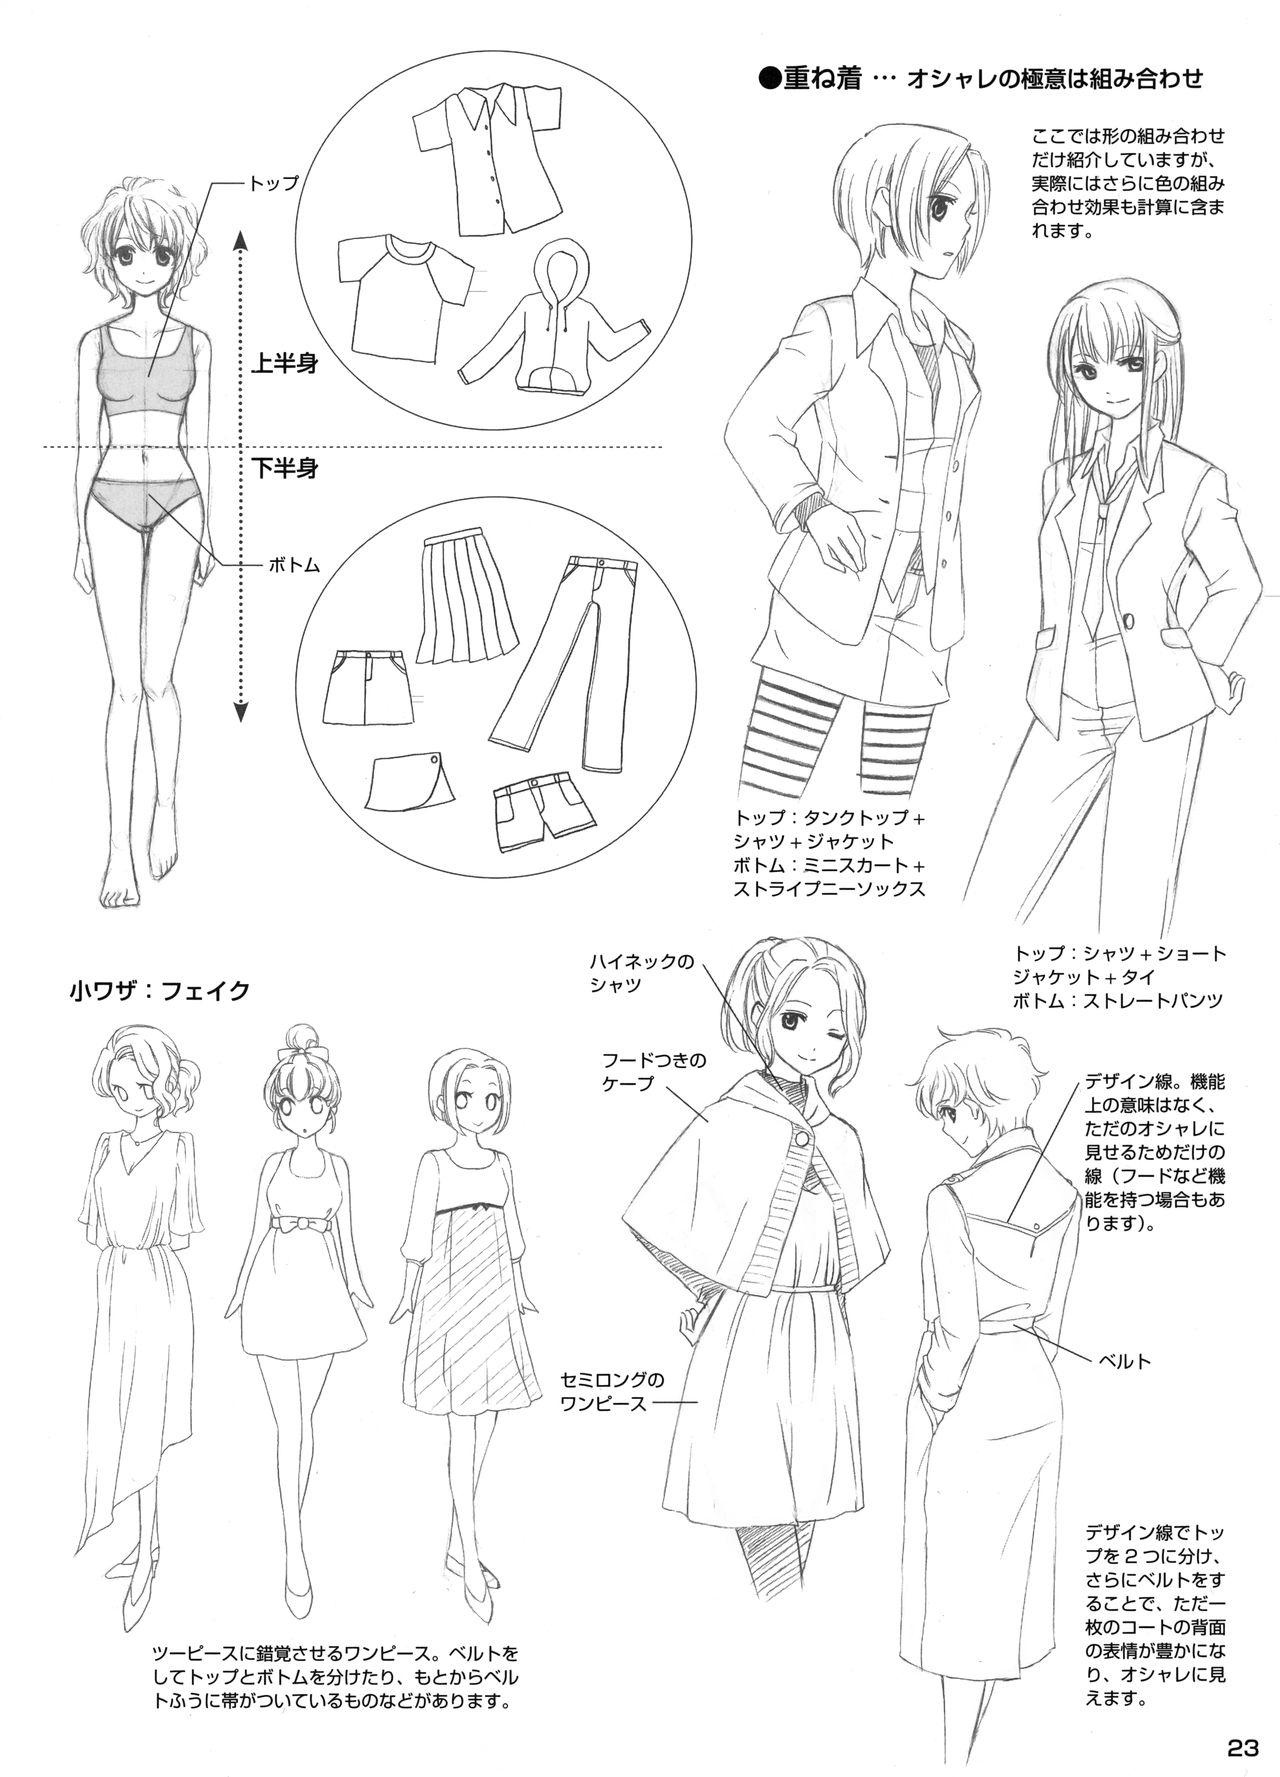 Manga no Kiso Dessin - Onnanoko Costume hen 23